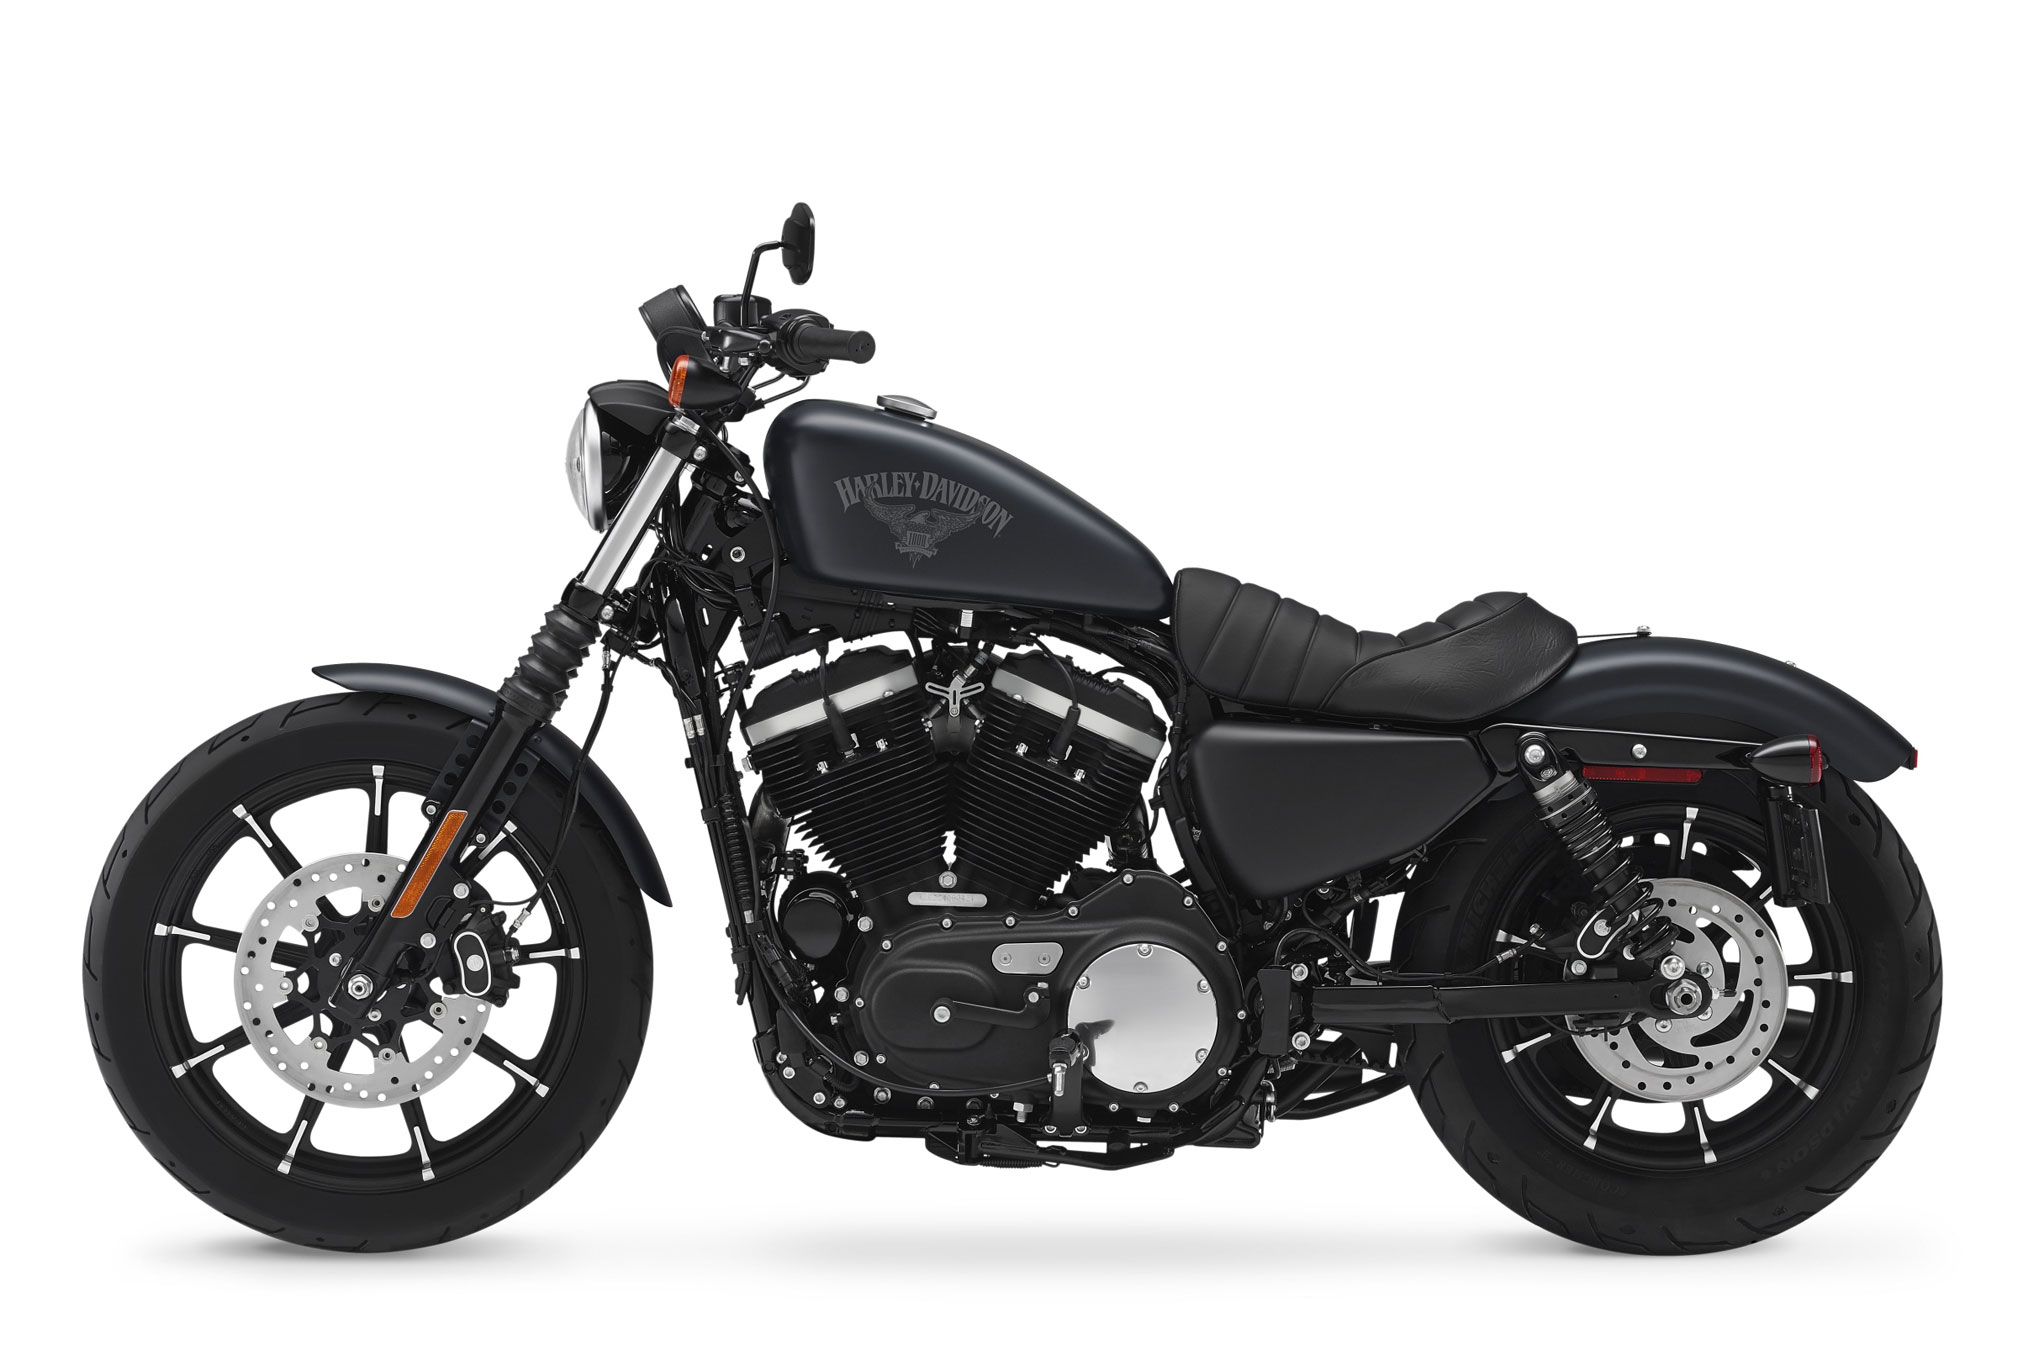 2018 Harley Davidson Iron 883 Review Total Motorcycle